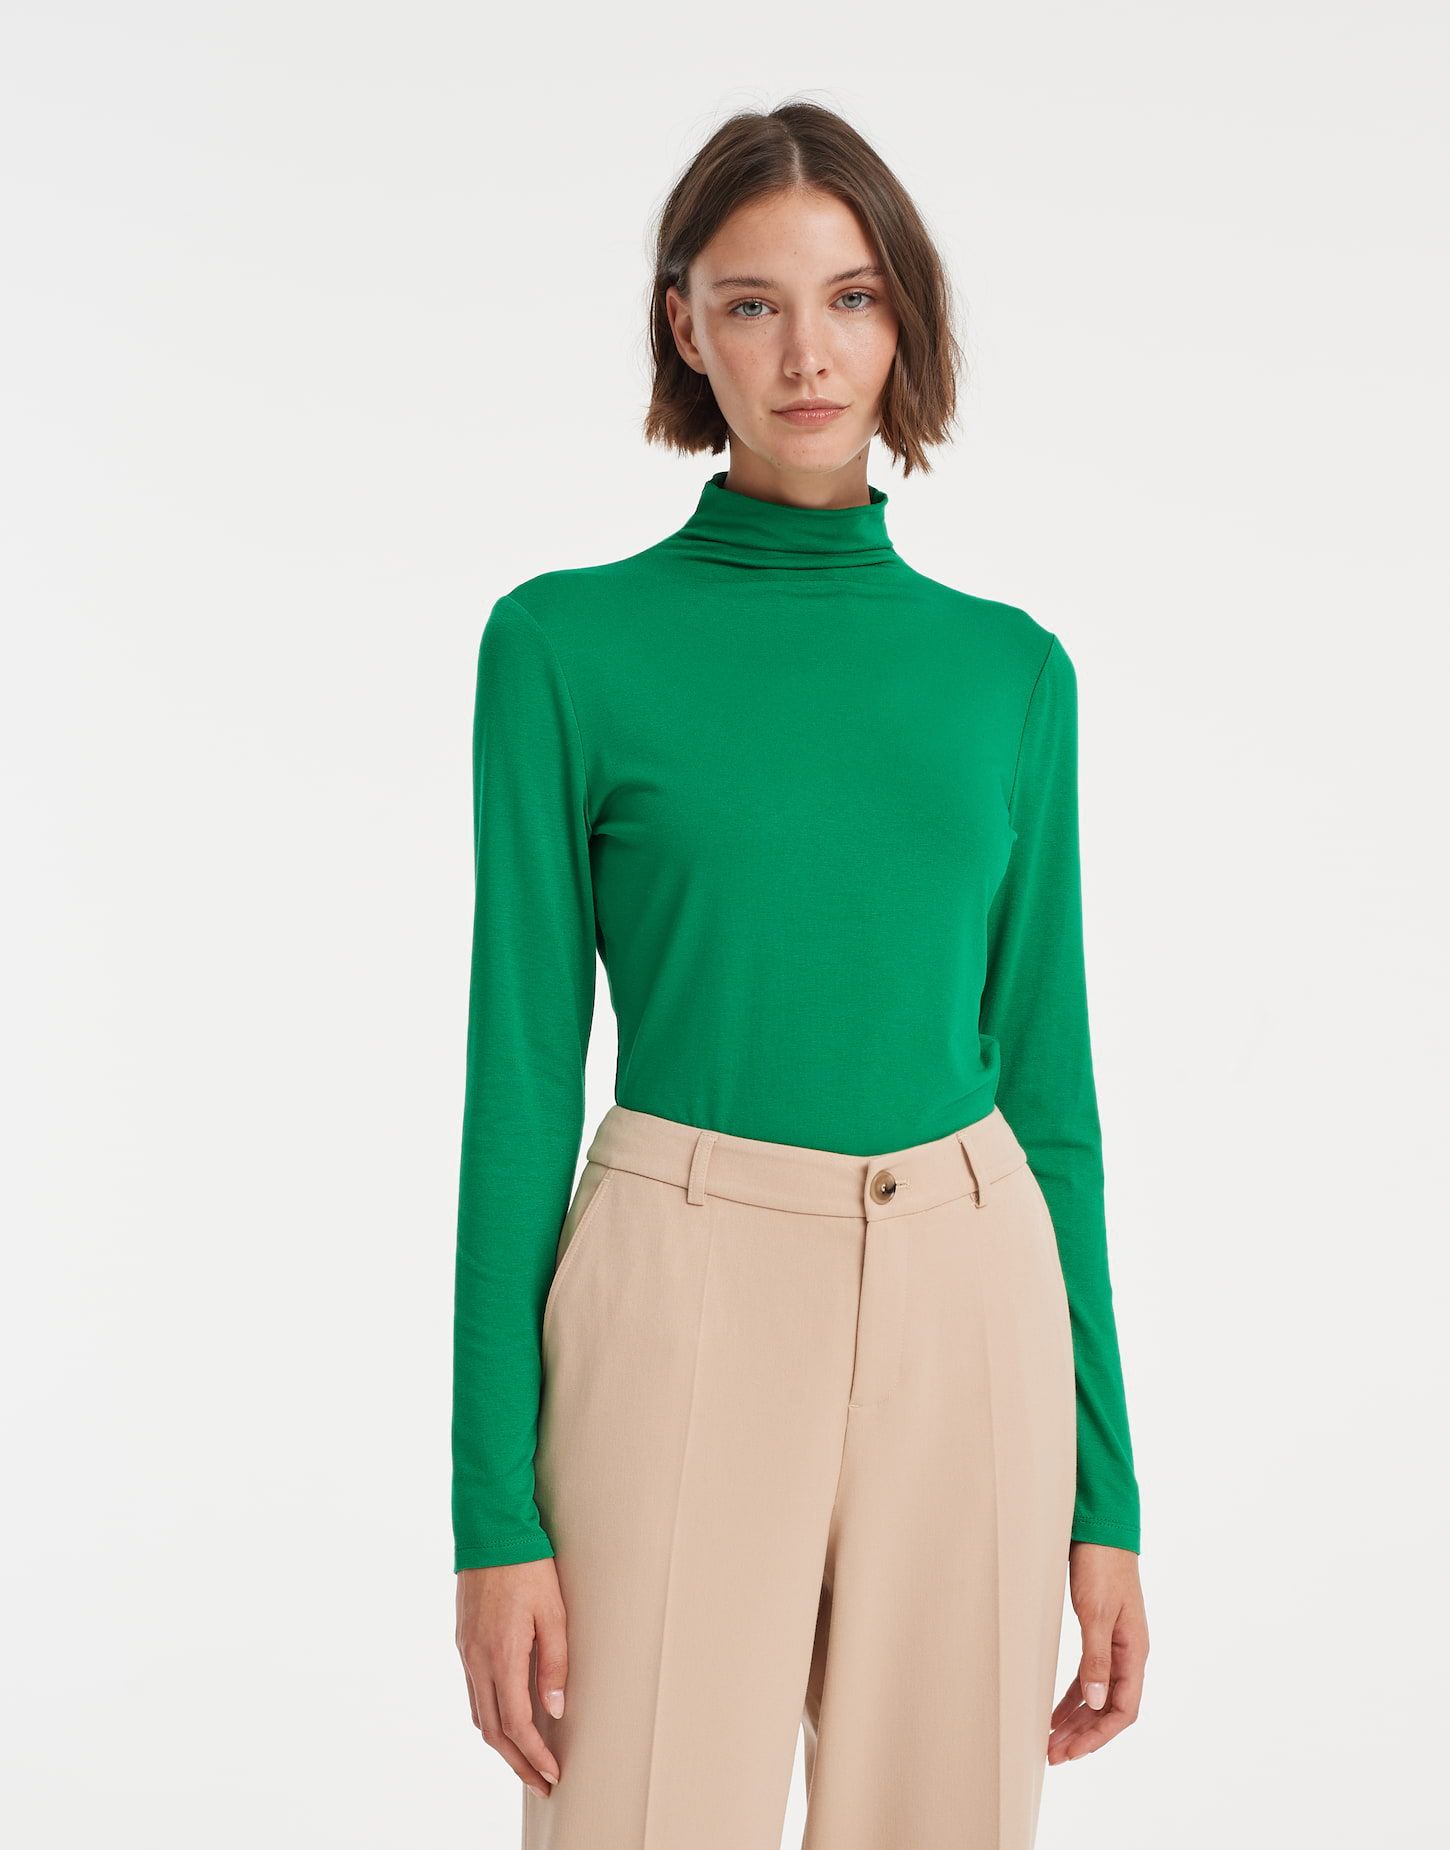 T-shirt OPUS sayar tulip green online bestellen | Henri's Fashion